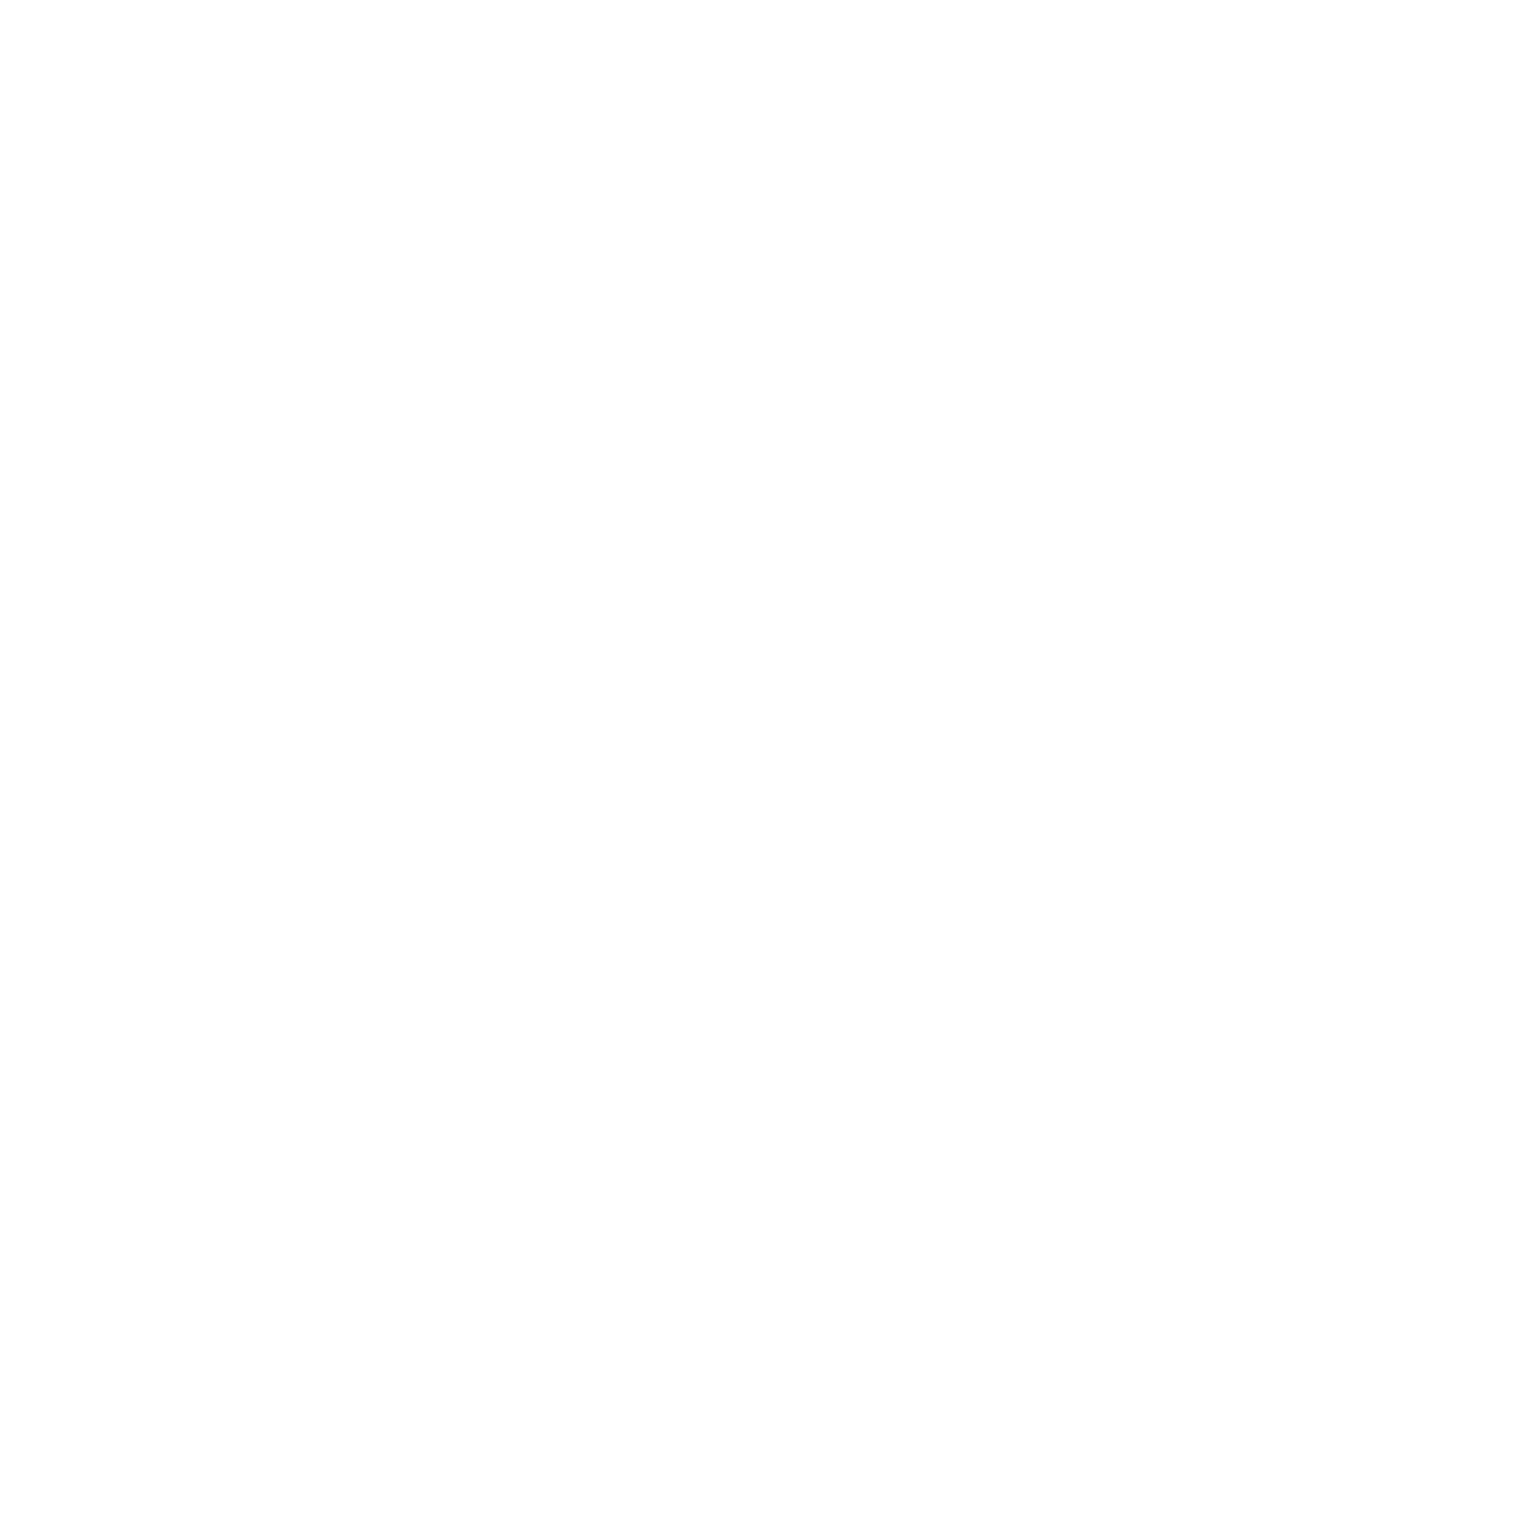 Grafton Group logo for dark backgrounds (transparent PNG)